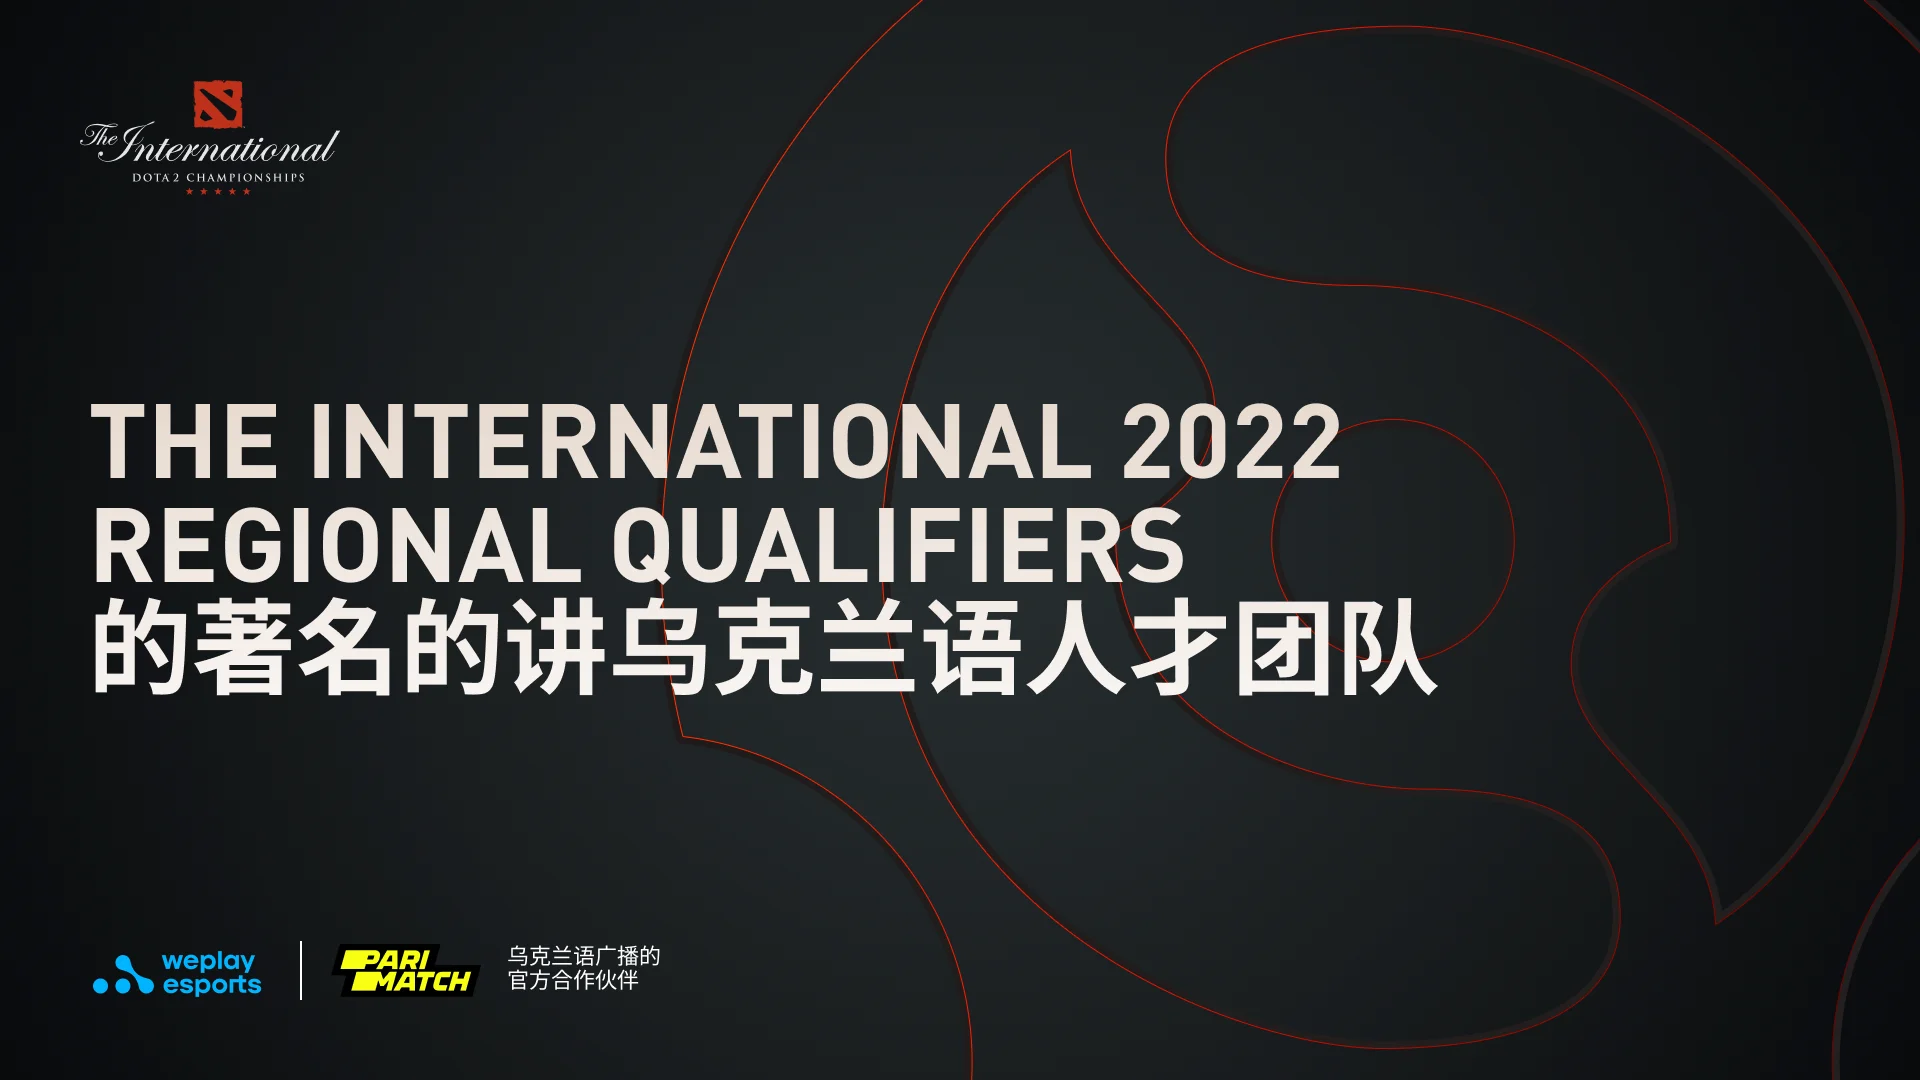 The International 2022 Regional Qualifiers 的著名的讲乌克兰语人才团队。图像：WePlay Holding